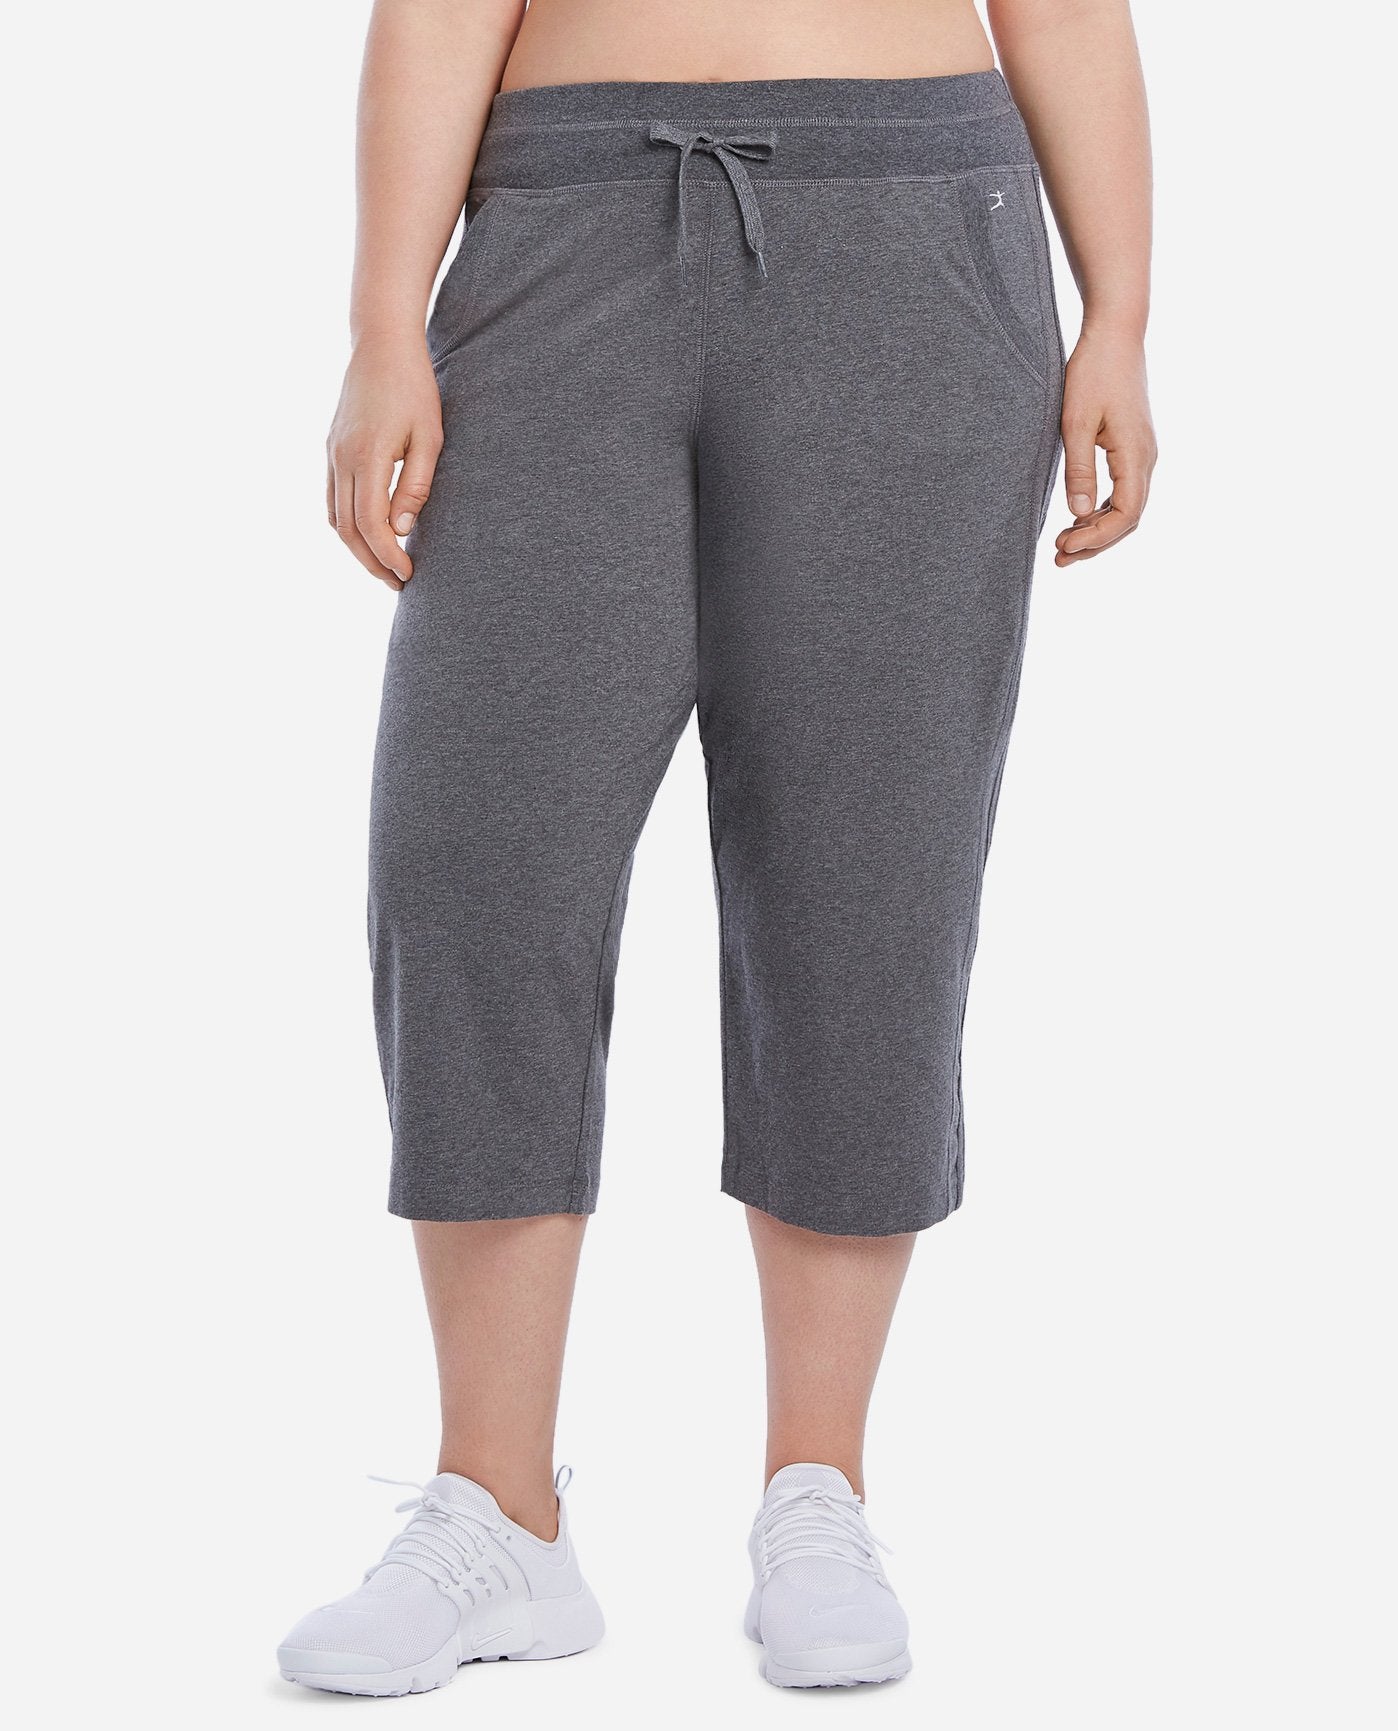 Danskin Now Women's Plus-Size Yoga Pant 